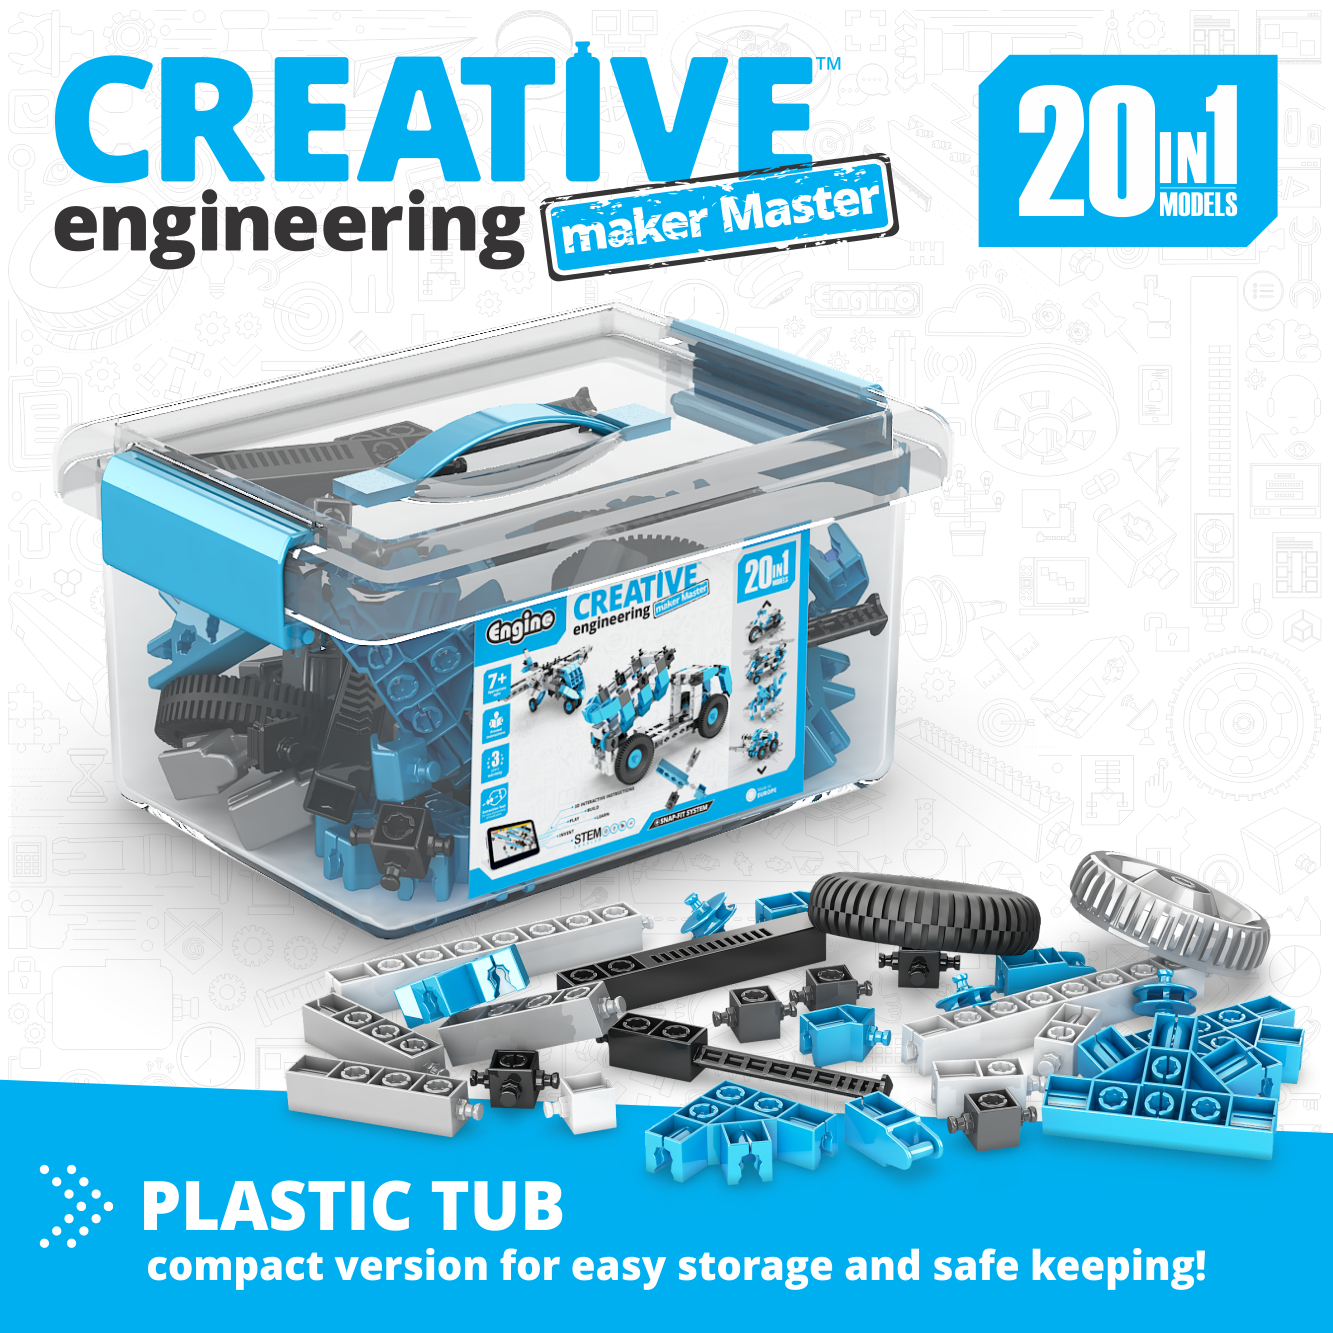 Creative Engineering 20 in 1 Maker Master Set